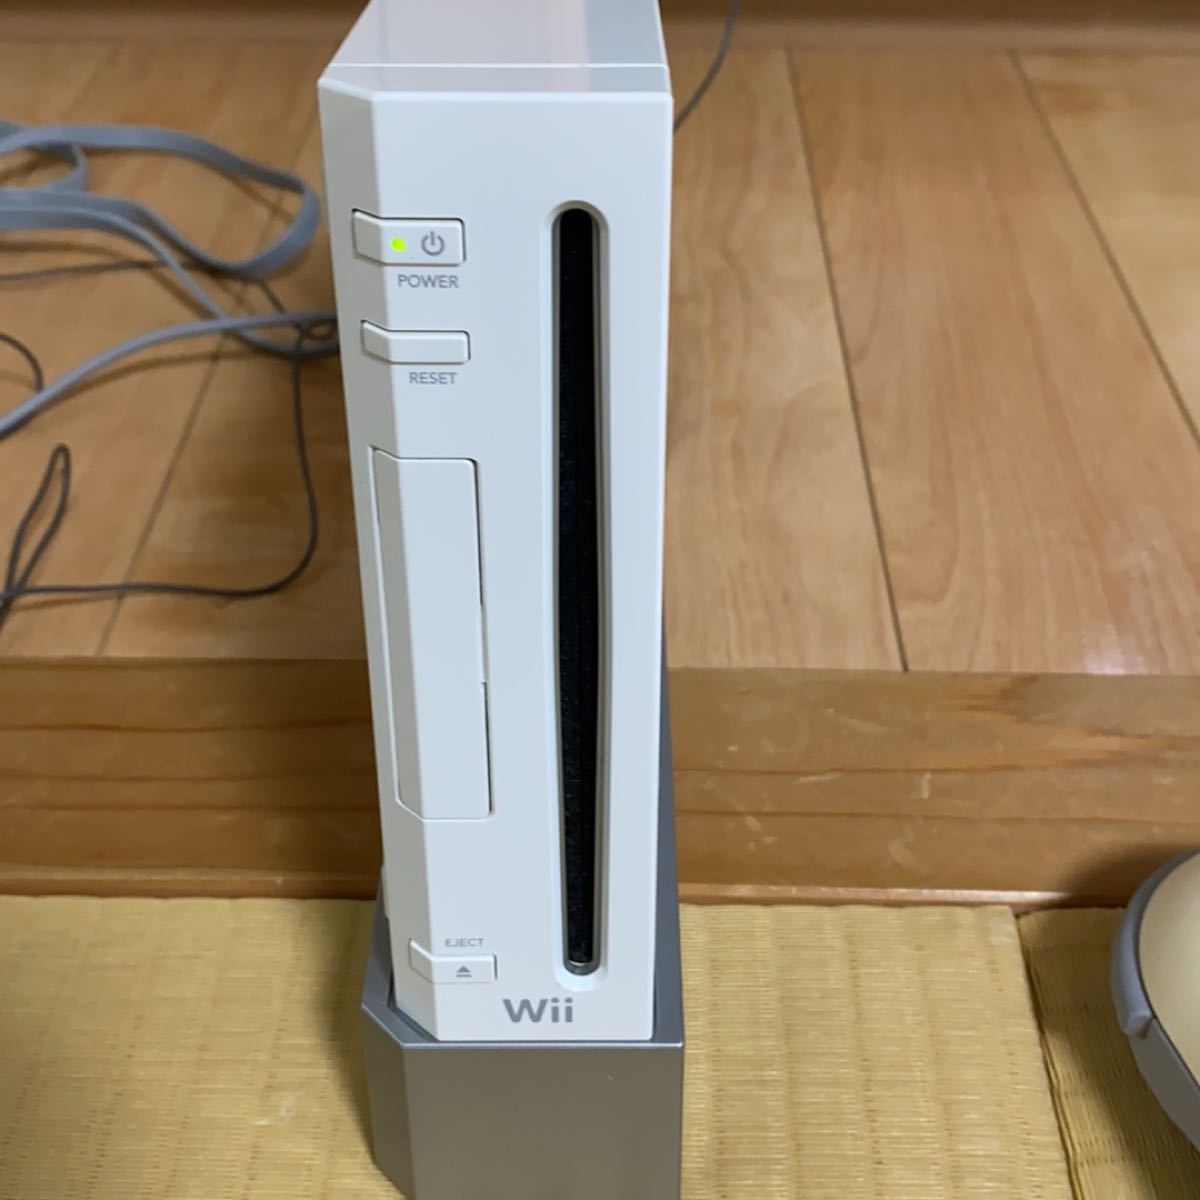 Nintendo Wii 本体&Wii FIT&ぷよぷよ